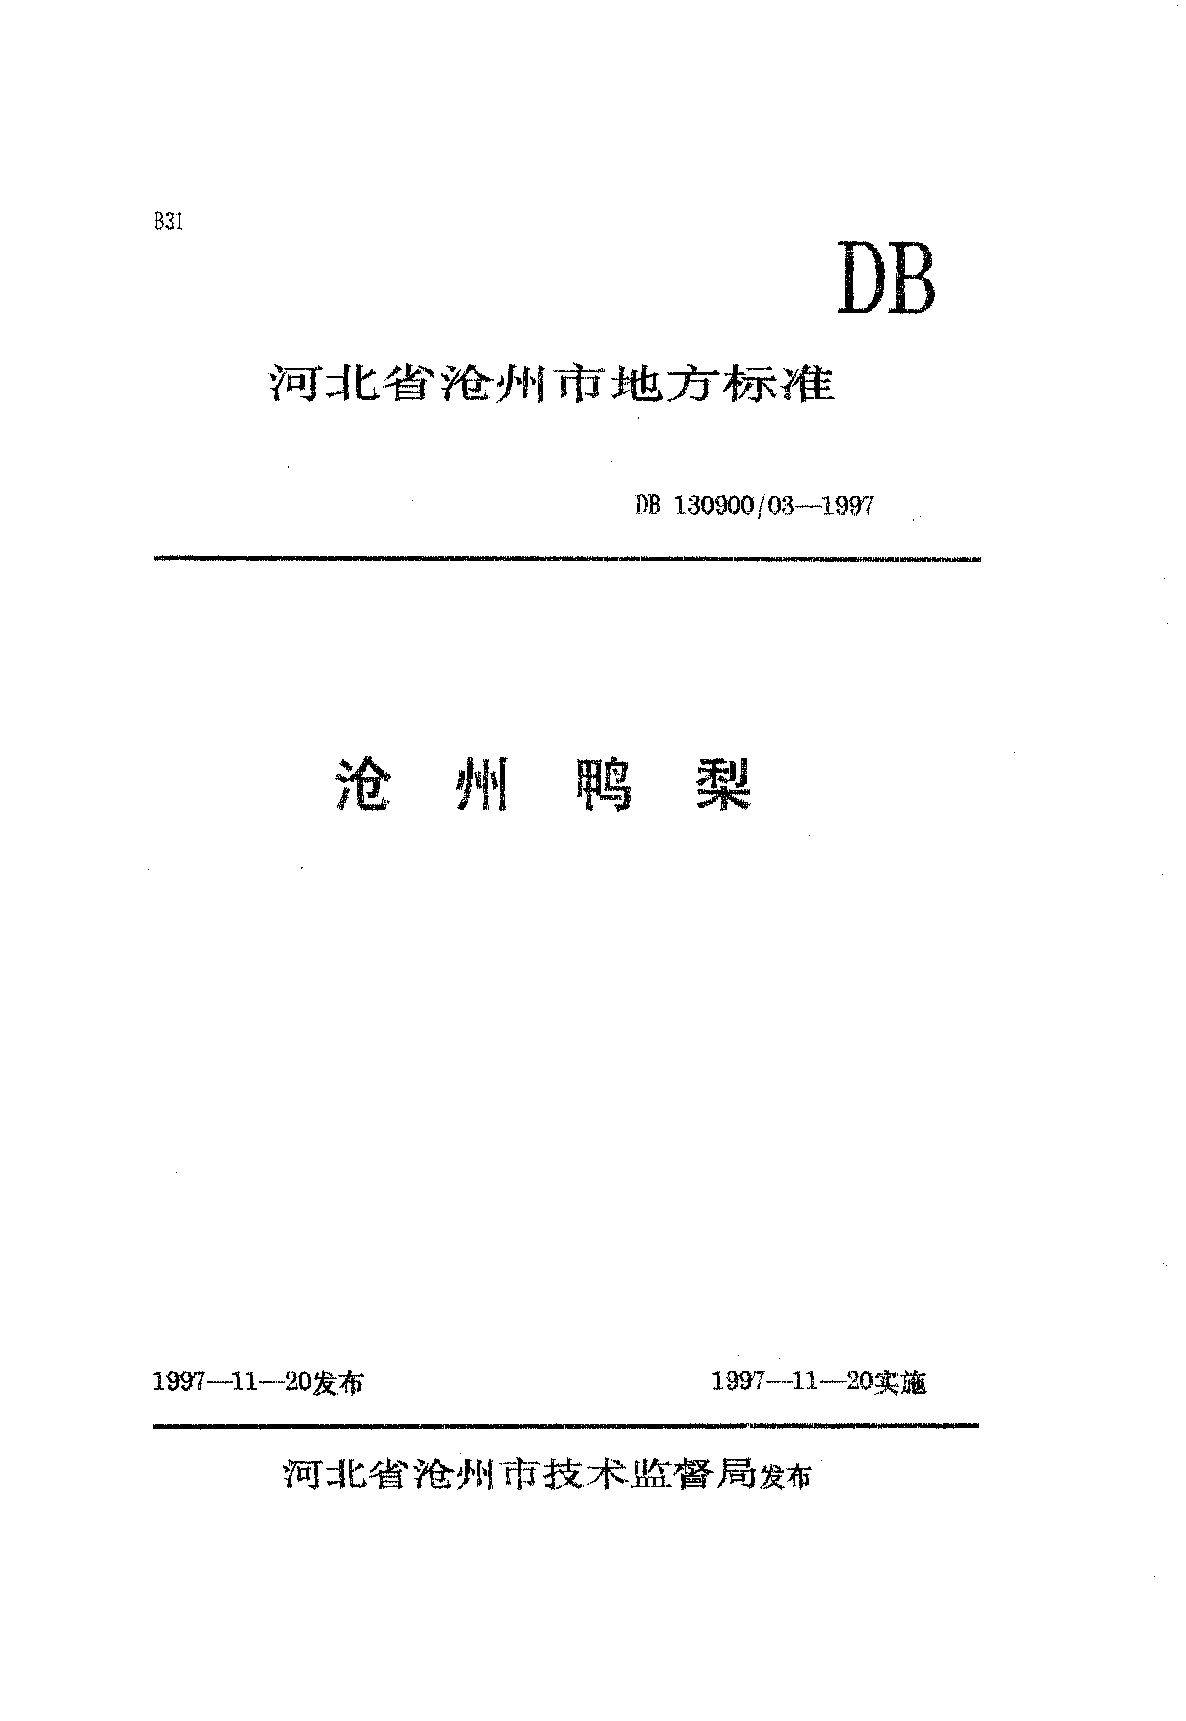 DB130900/T 03-1997